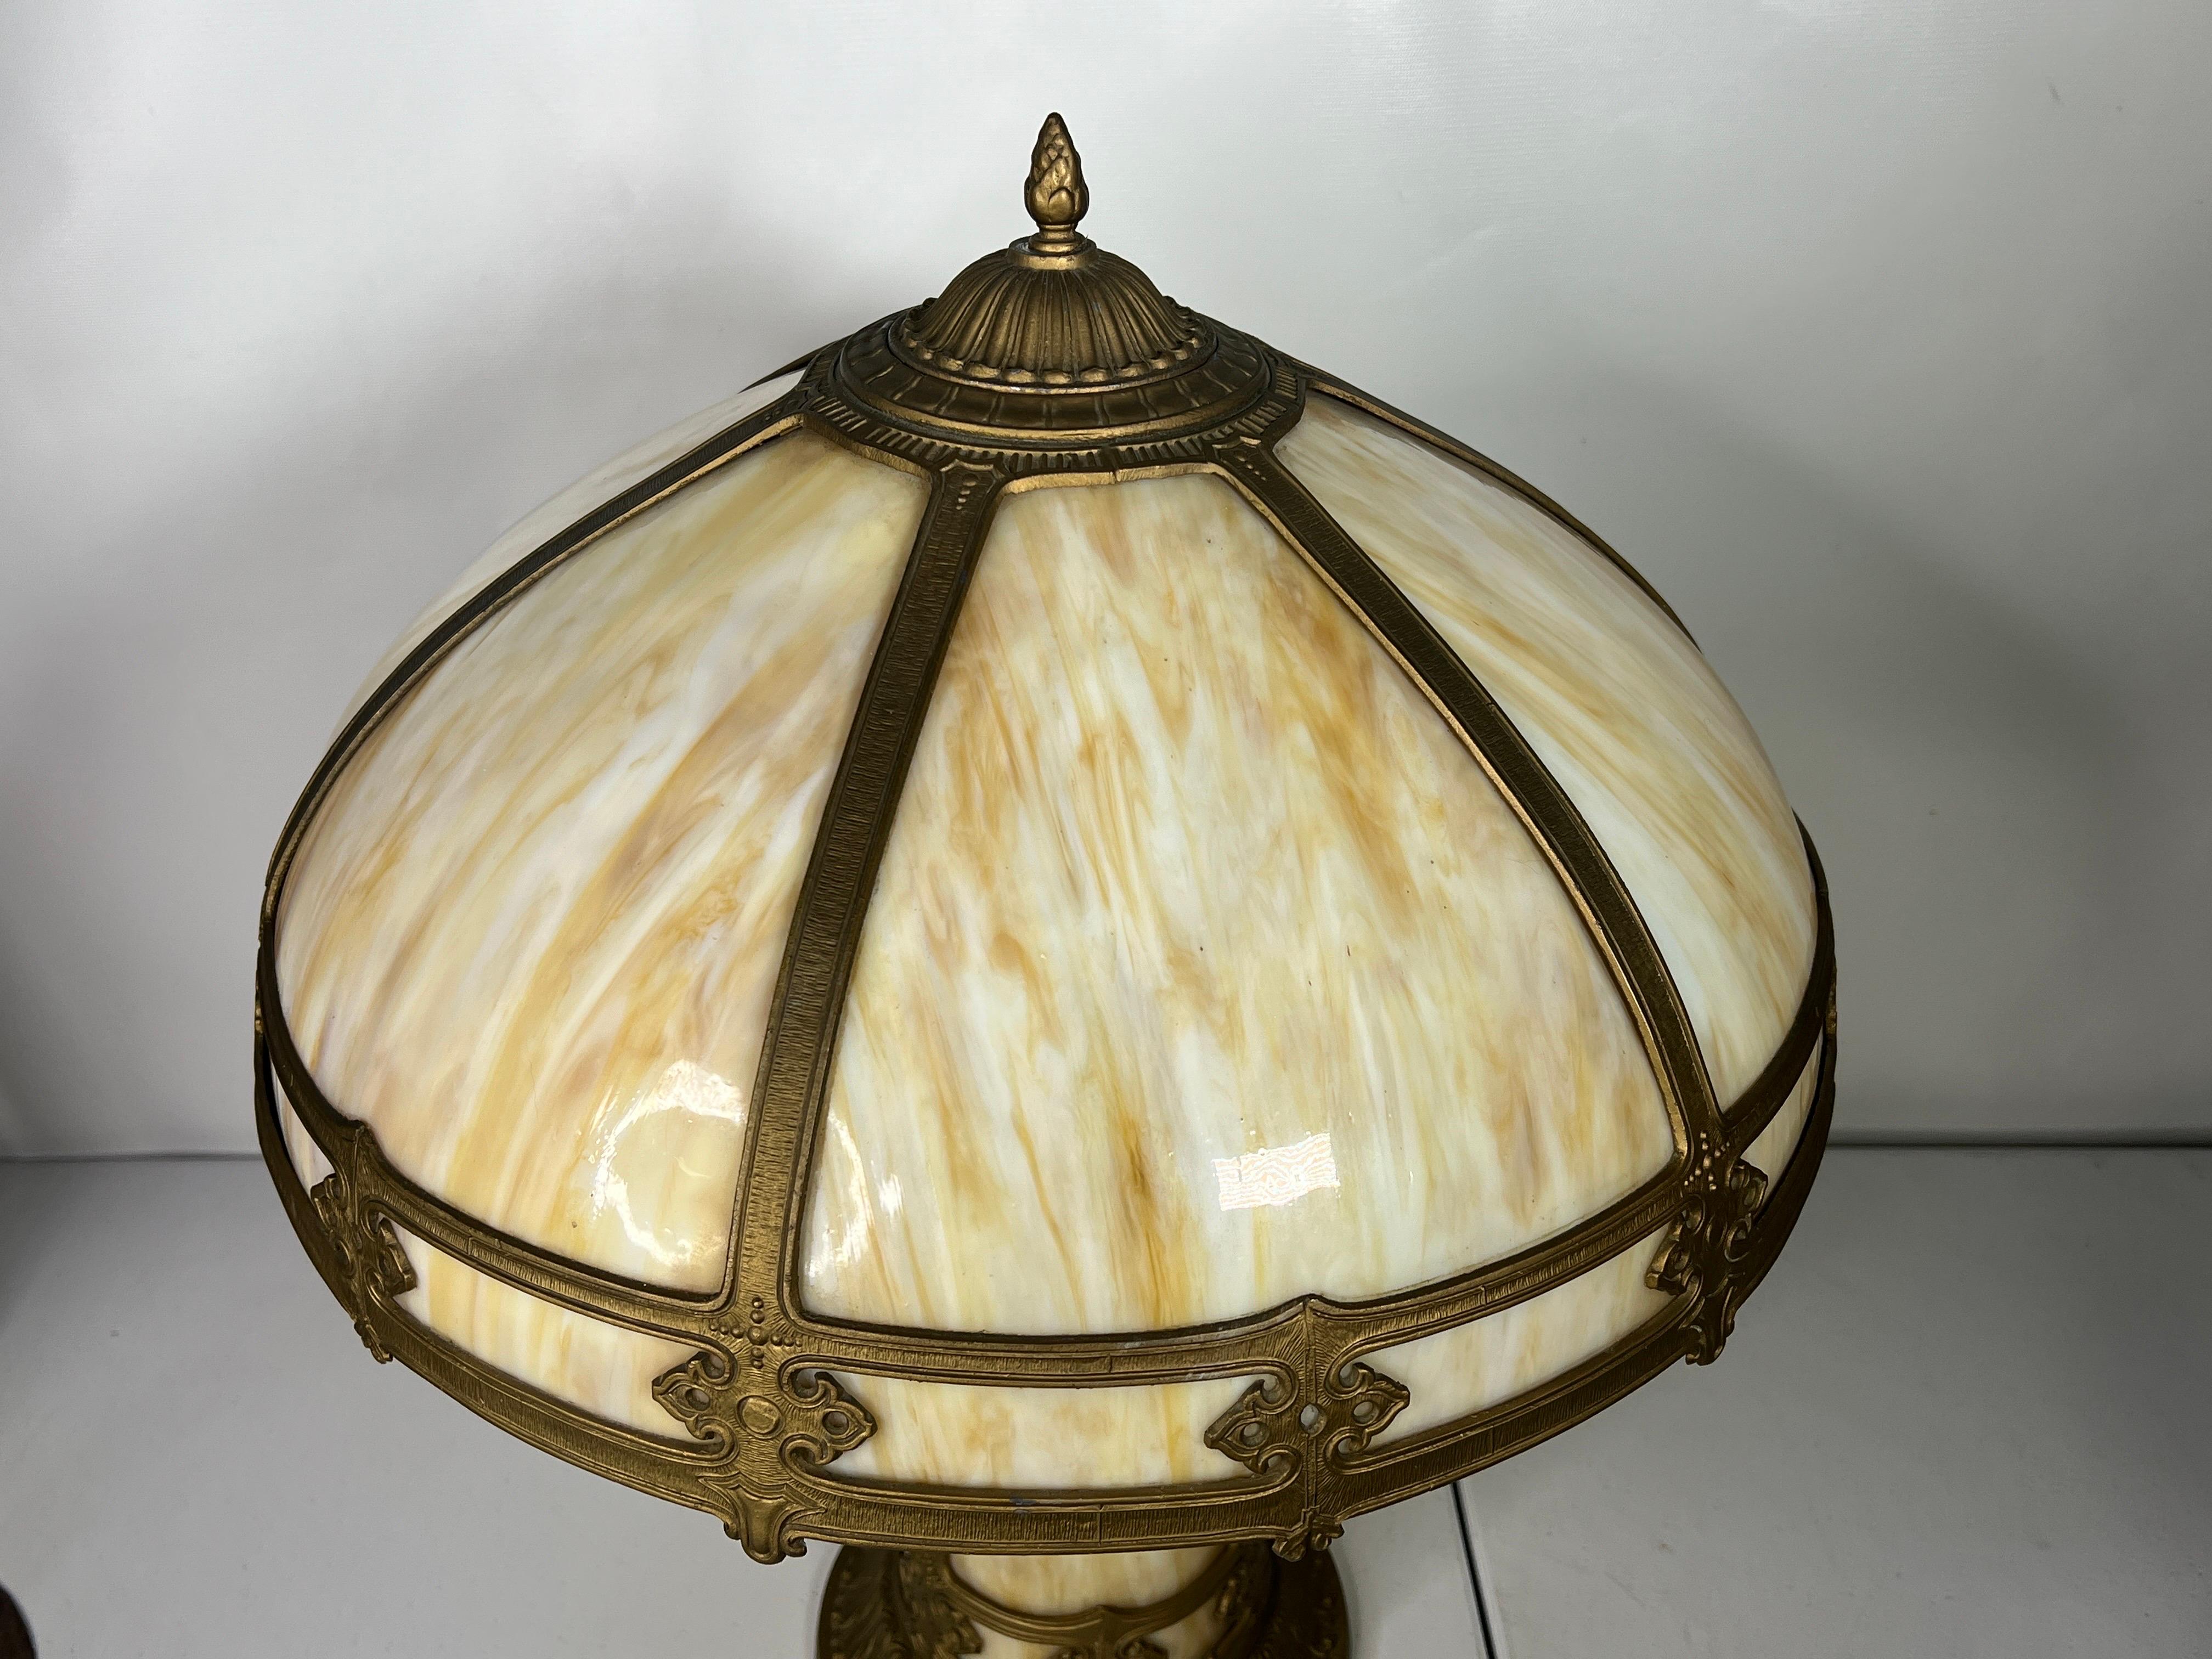 Dies ist eine absolut atemberaubende antike Jugendstil Schlacke Glaslampe, die alle original ist.